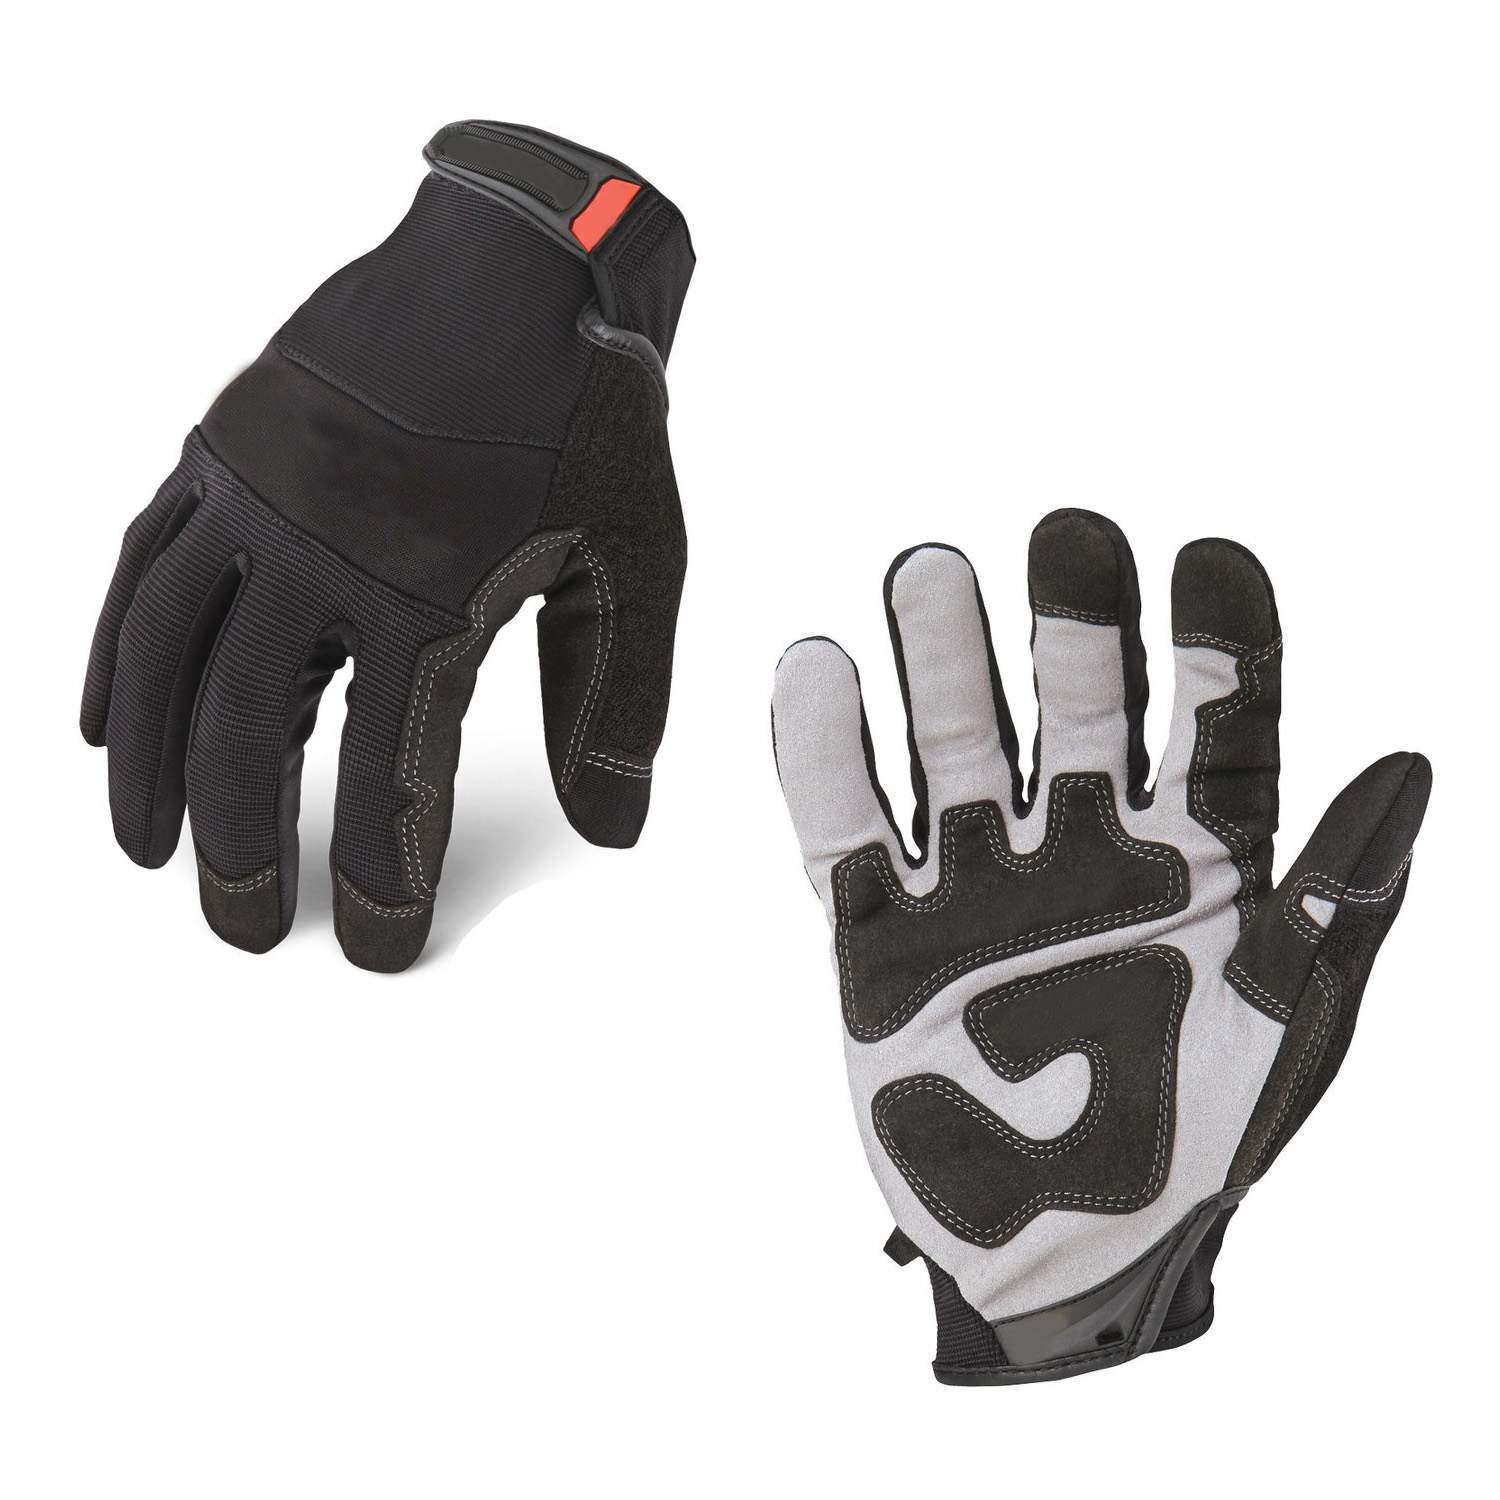 High dexterous durable heavy duty oil resistant mechanic safety work gloves